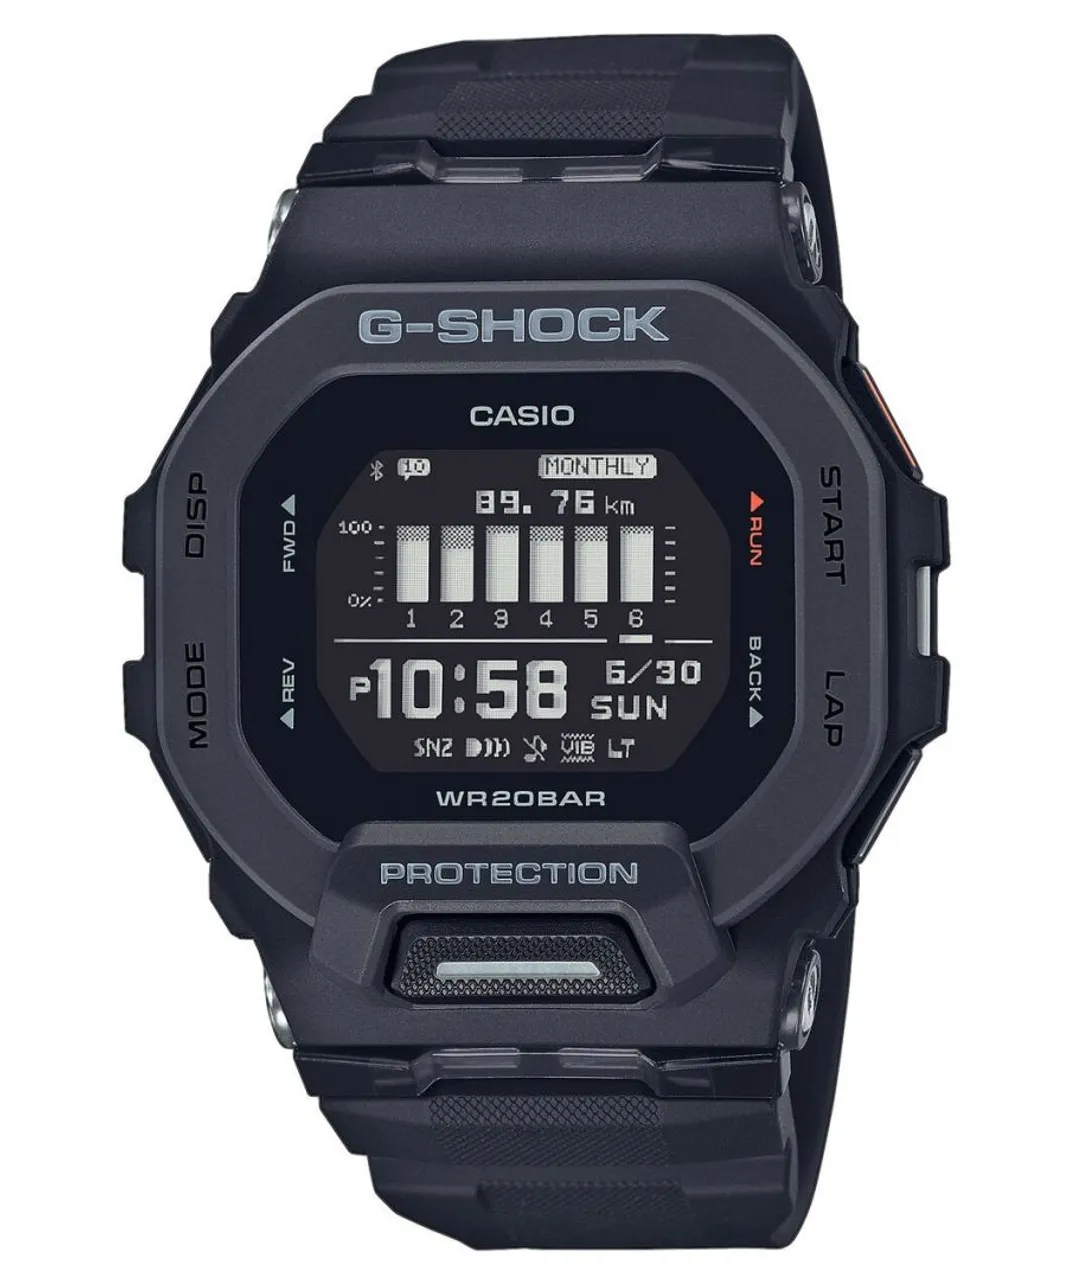 Casio G-shock Mens Black Watch GBD-200-1ER - One Size